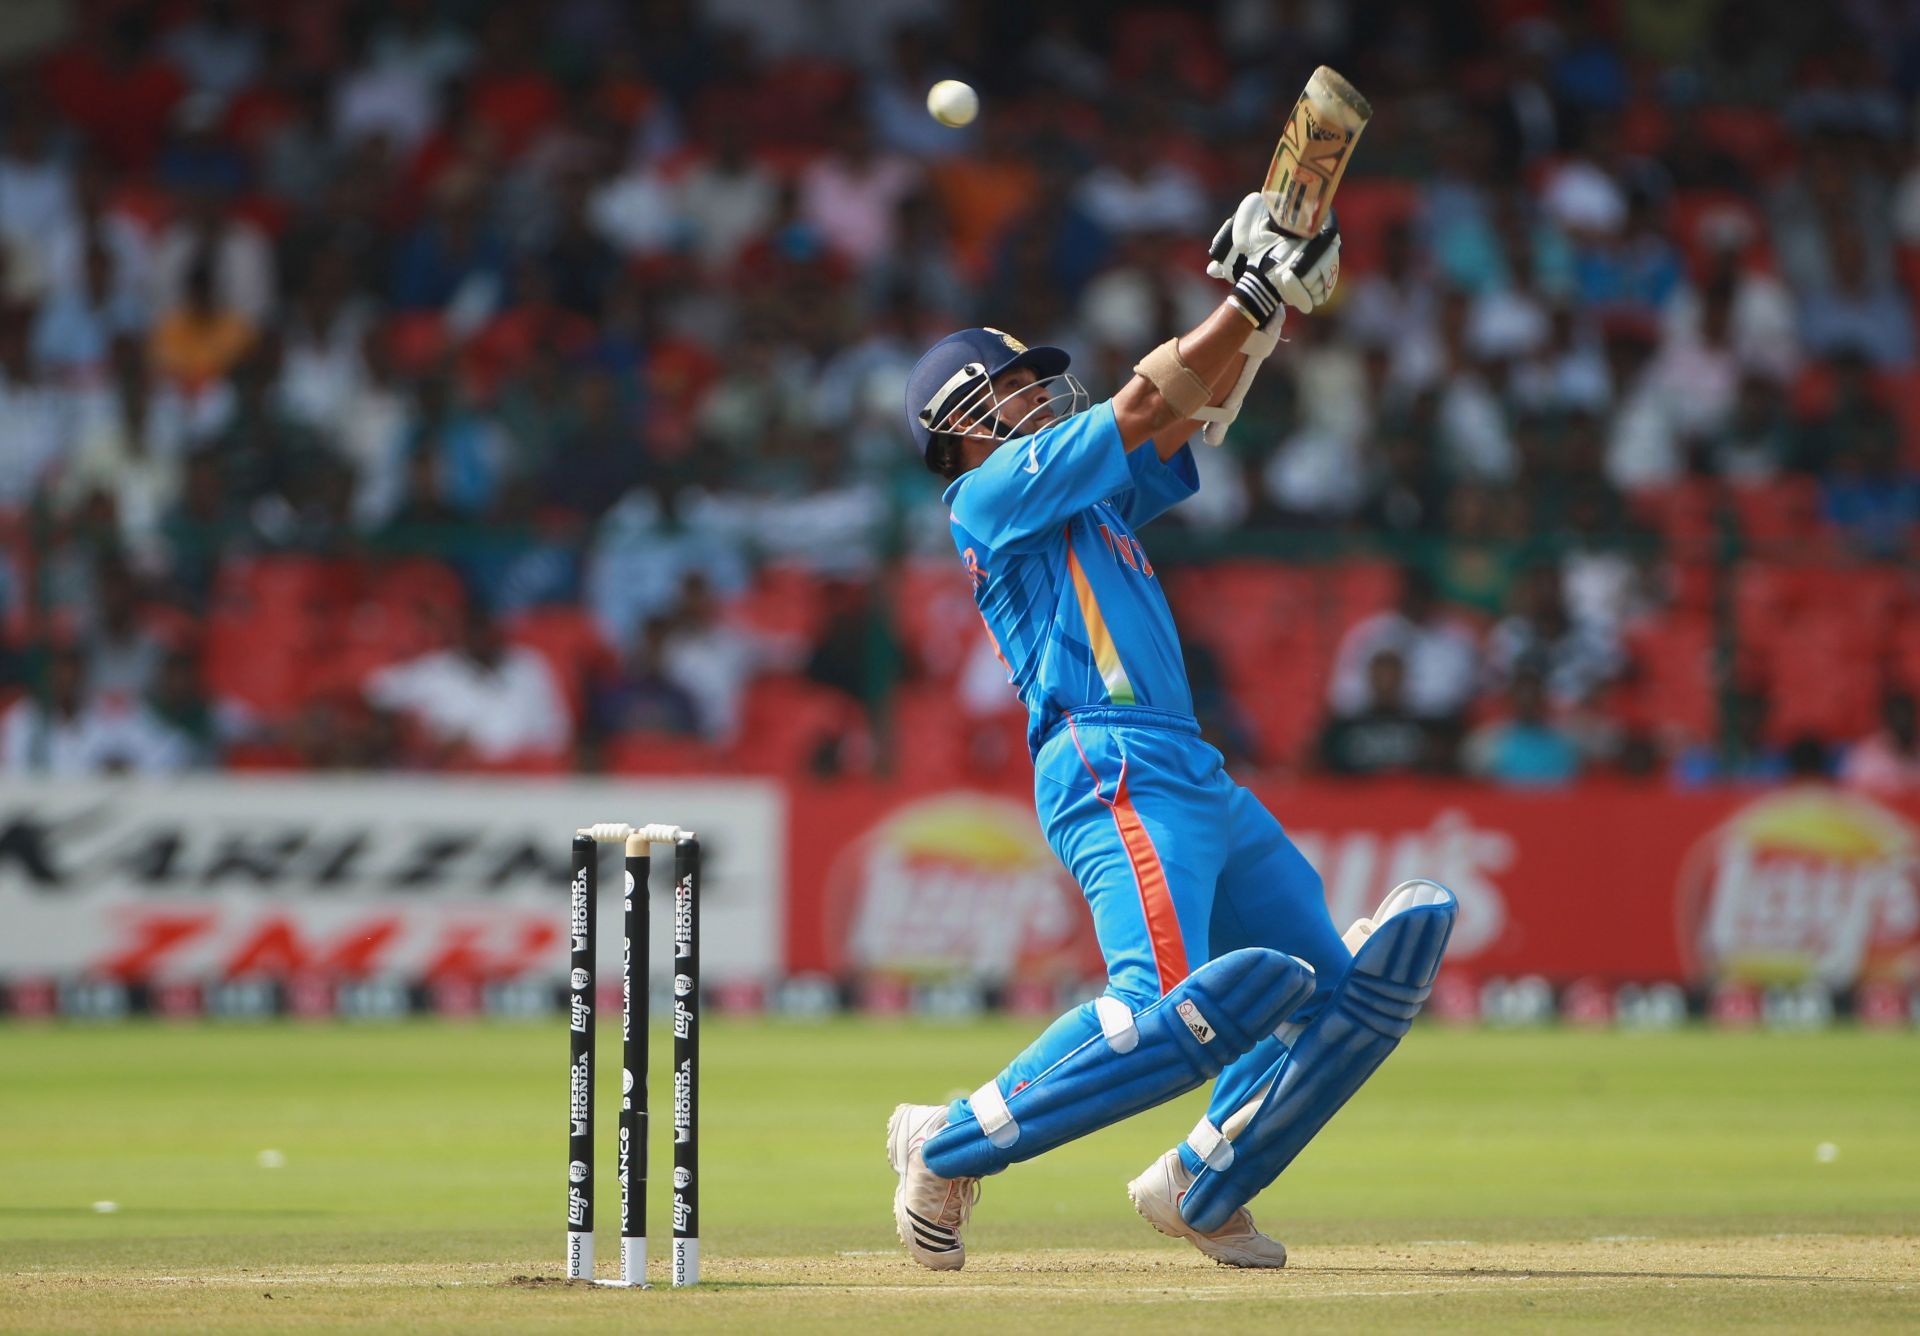 Sachin Tendulkar has played some splendid knocks against the Aussies. (Pic: Getty Images)